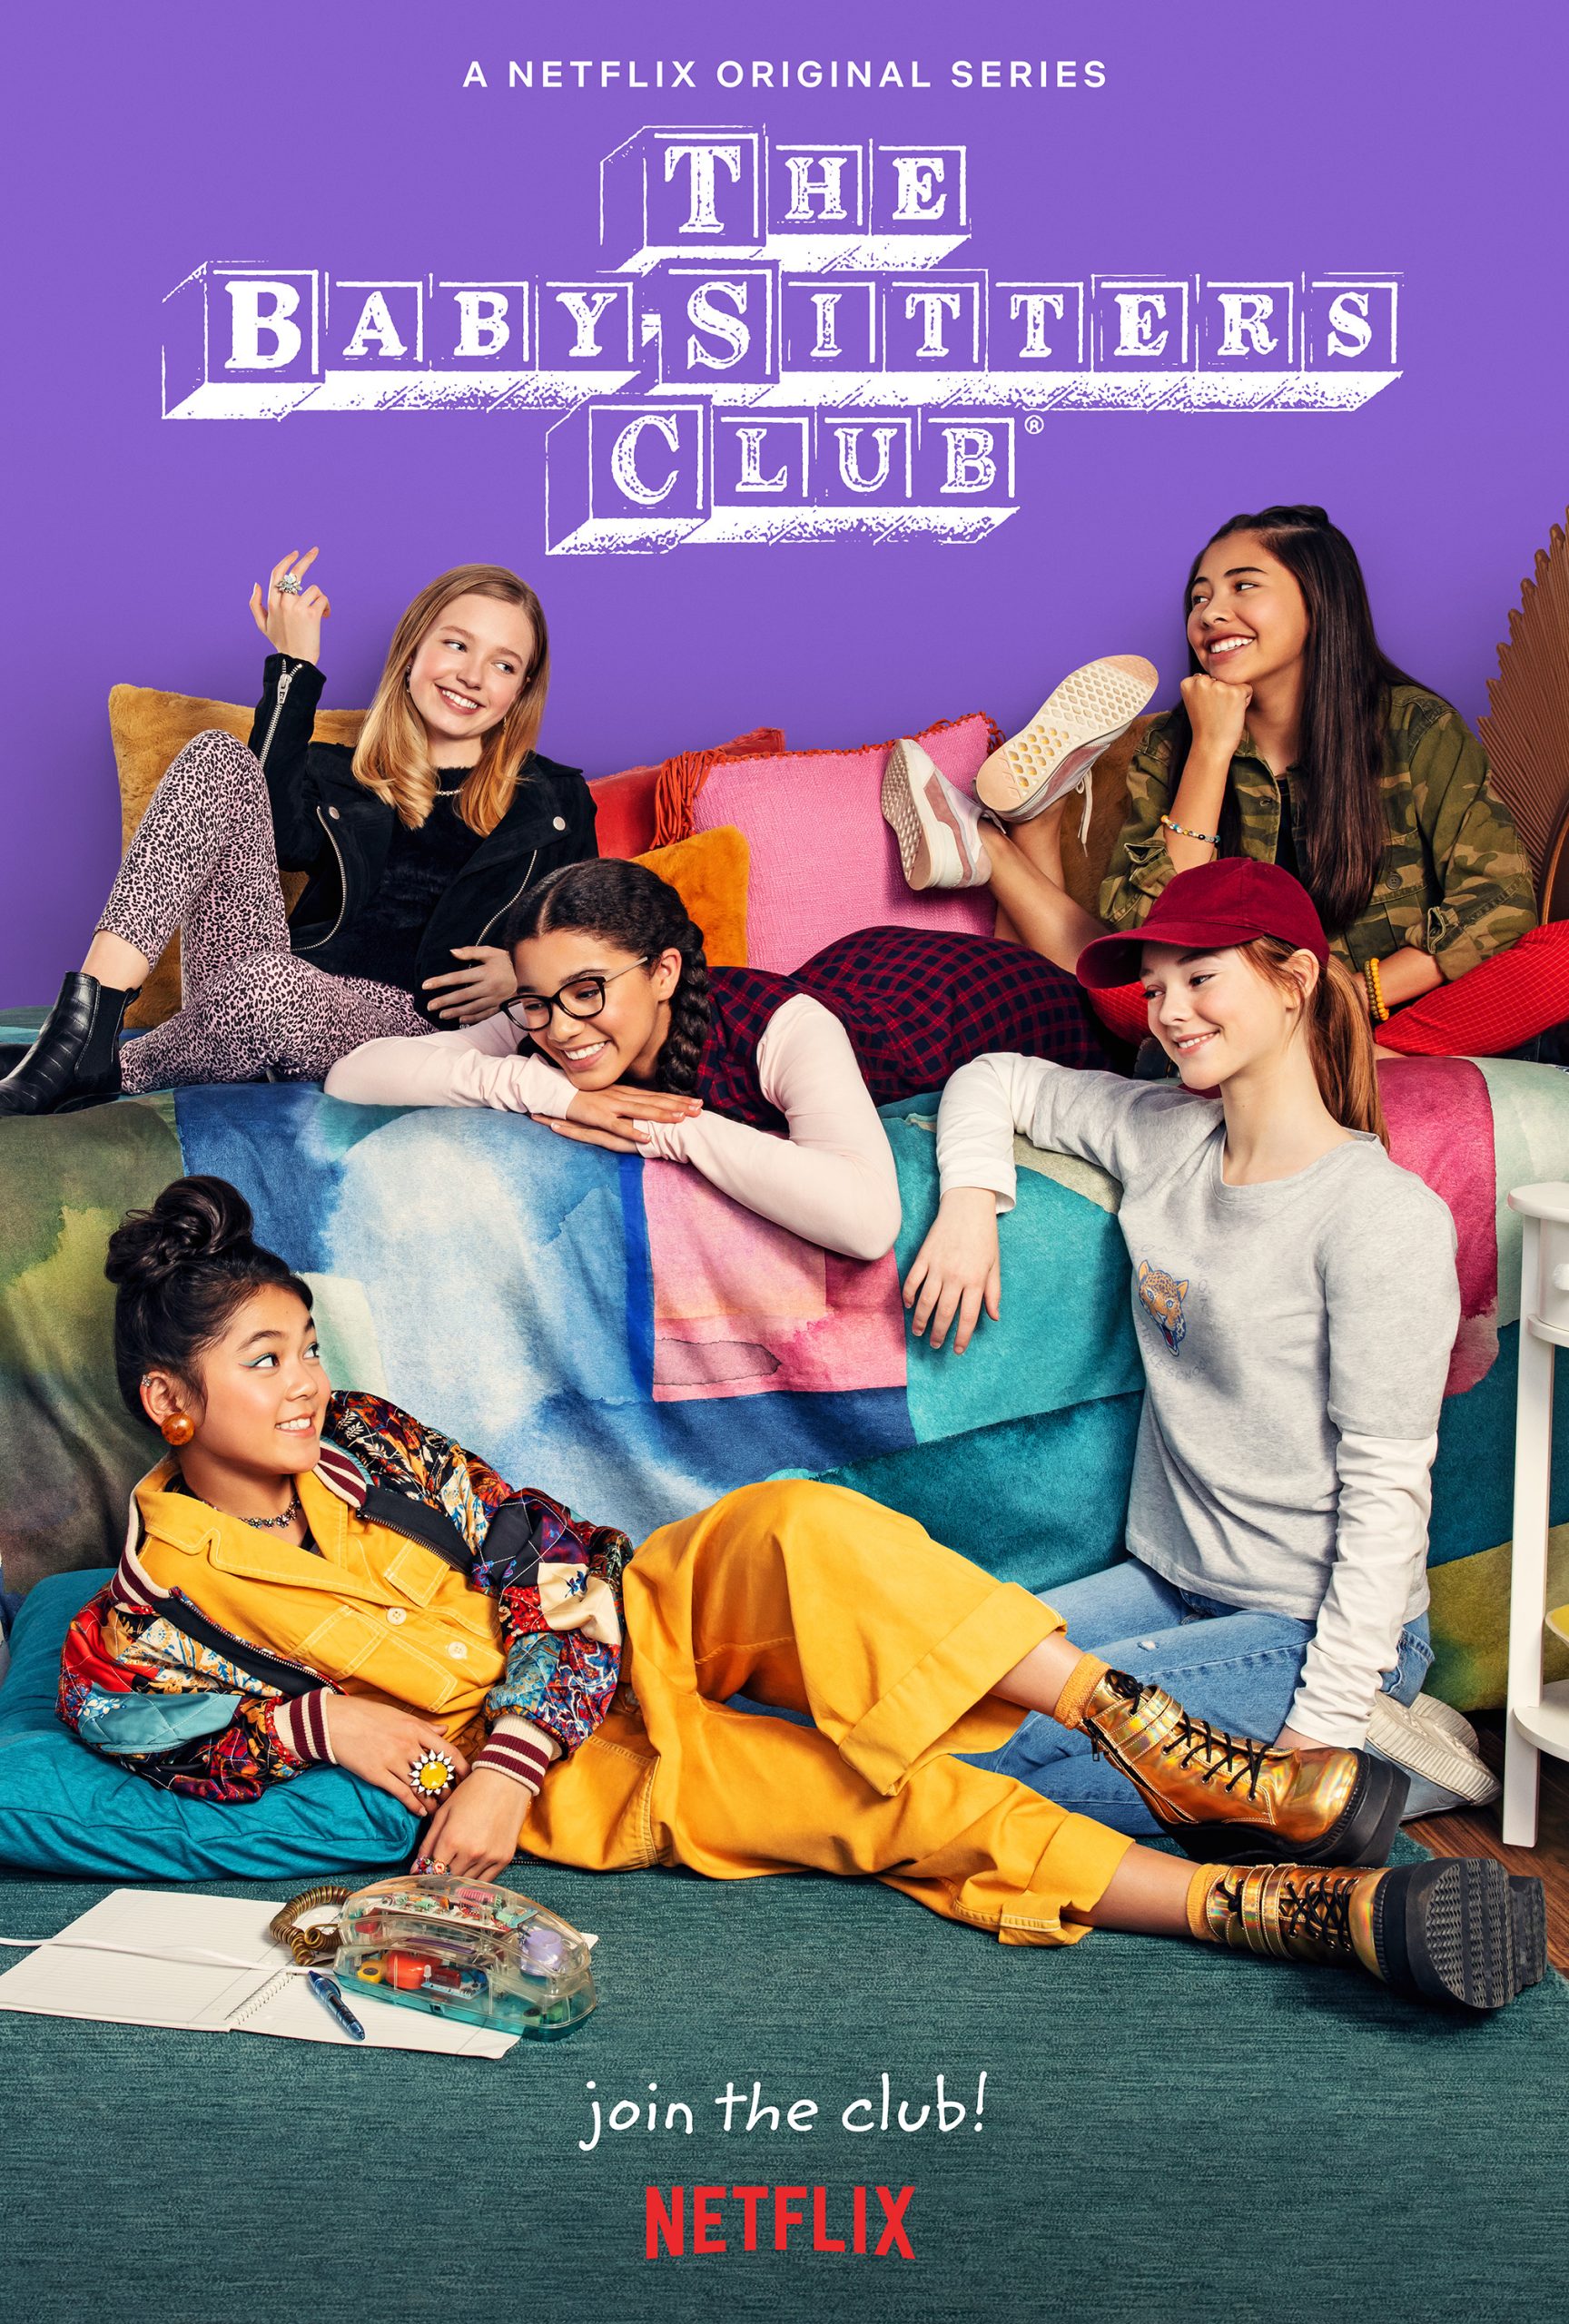 New Movie: Netflix’s The Babysitters Club